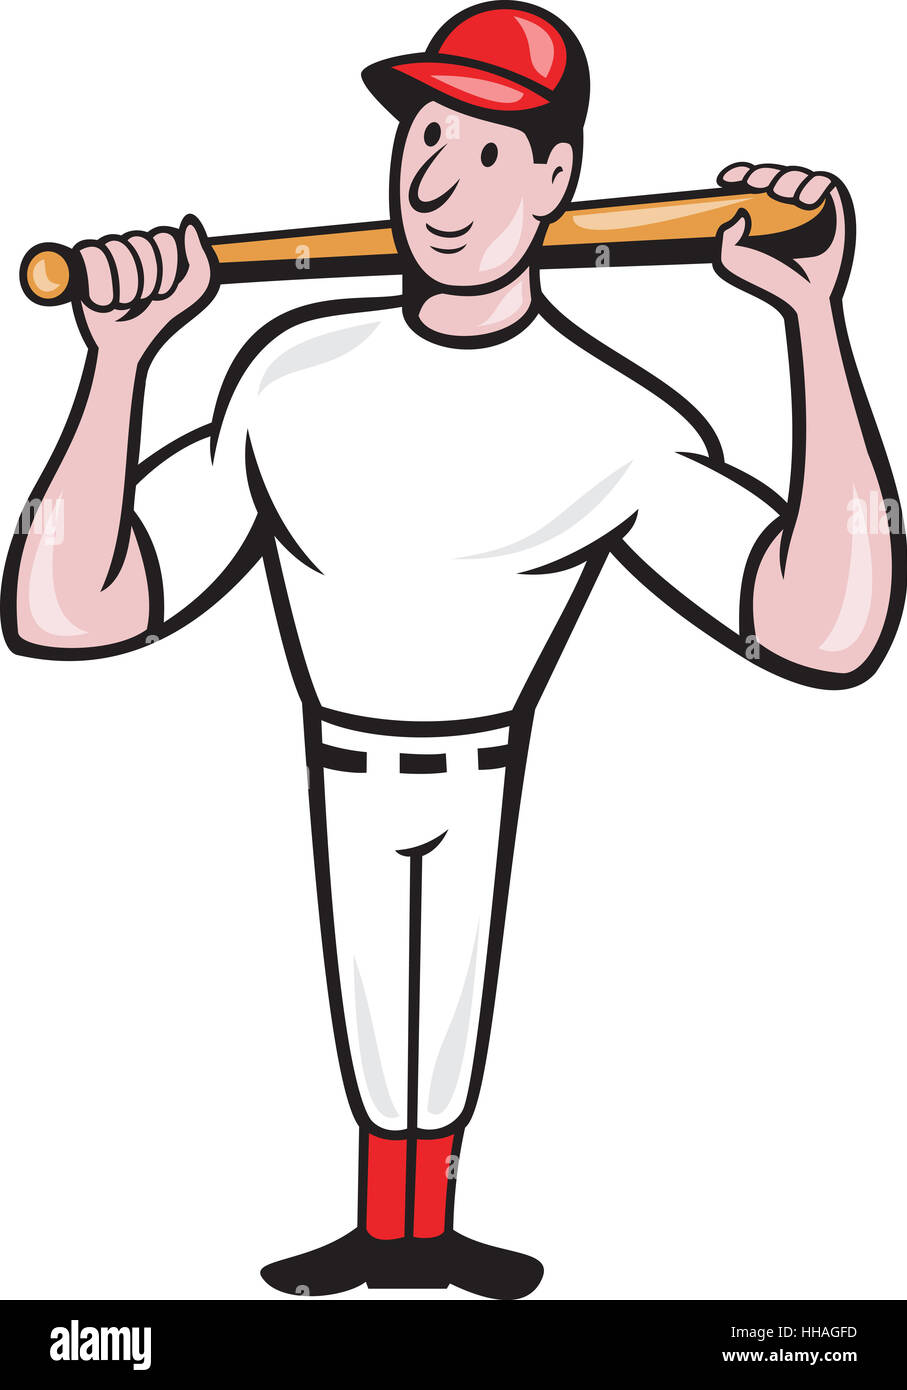 Illustration of a american baseball player batting bat on shoulder cartoon style isolated on white background. Stock Photo